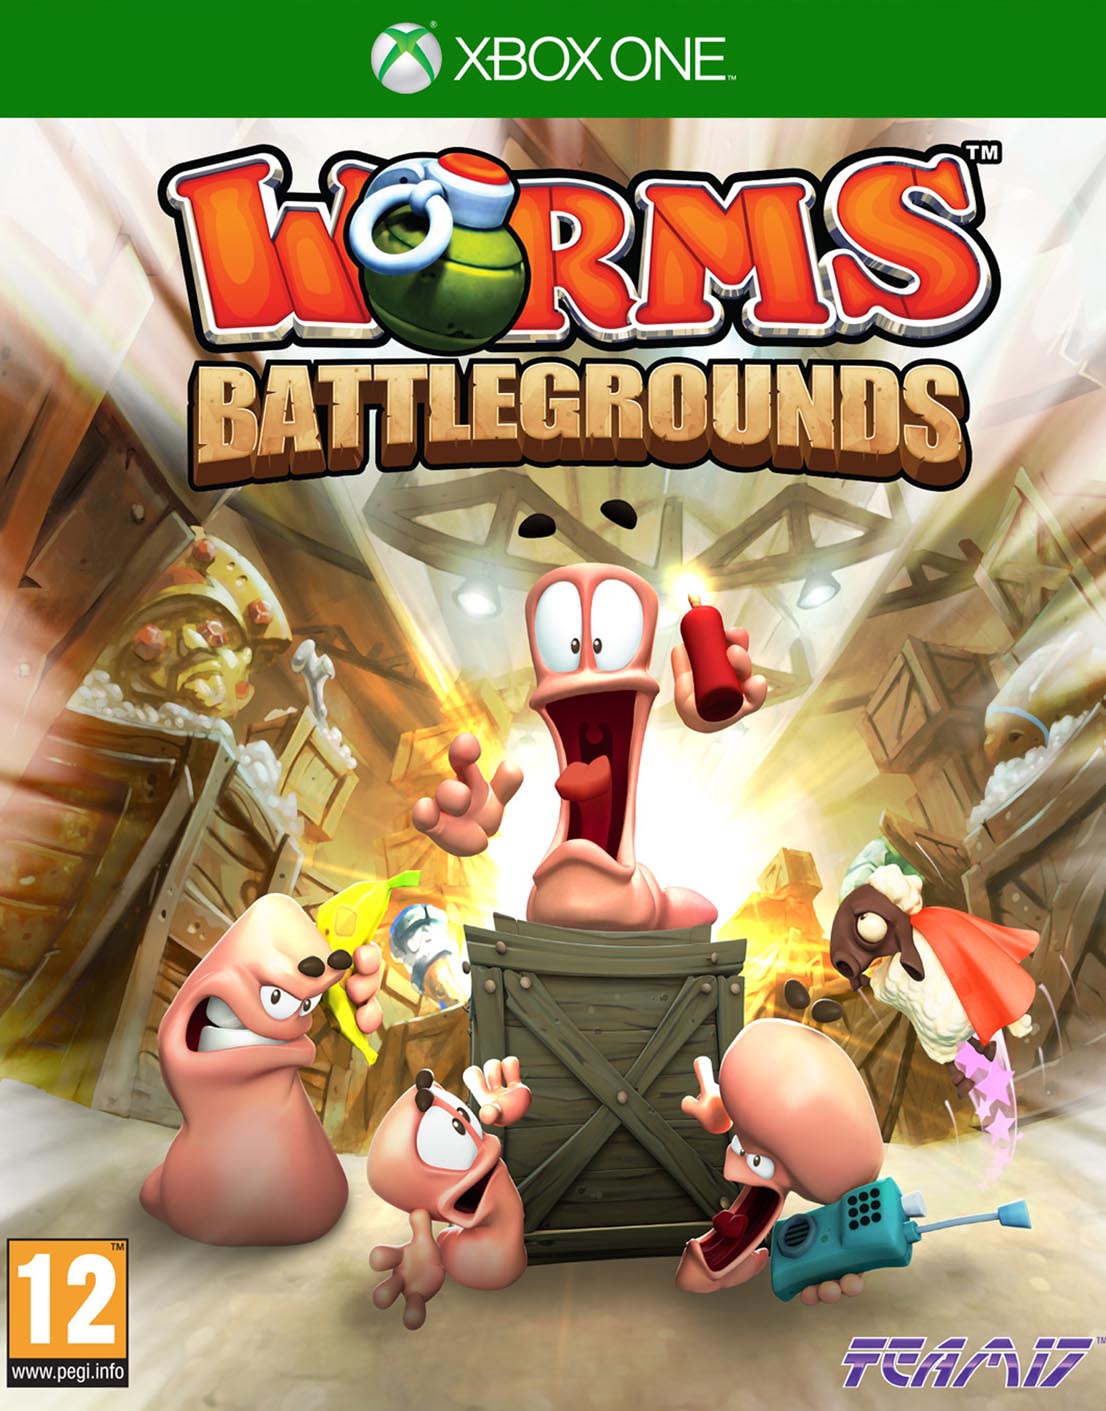 Worms: Battlegrounds (Xbox One), Team 17